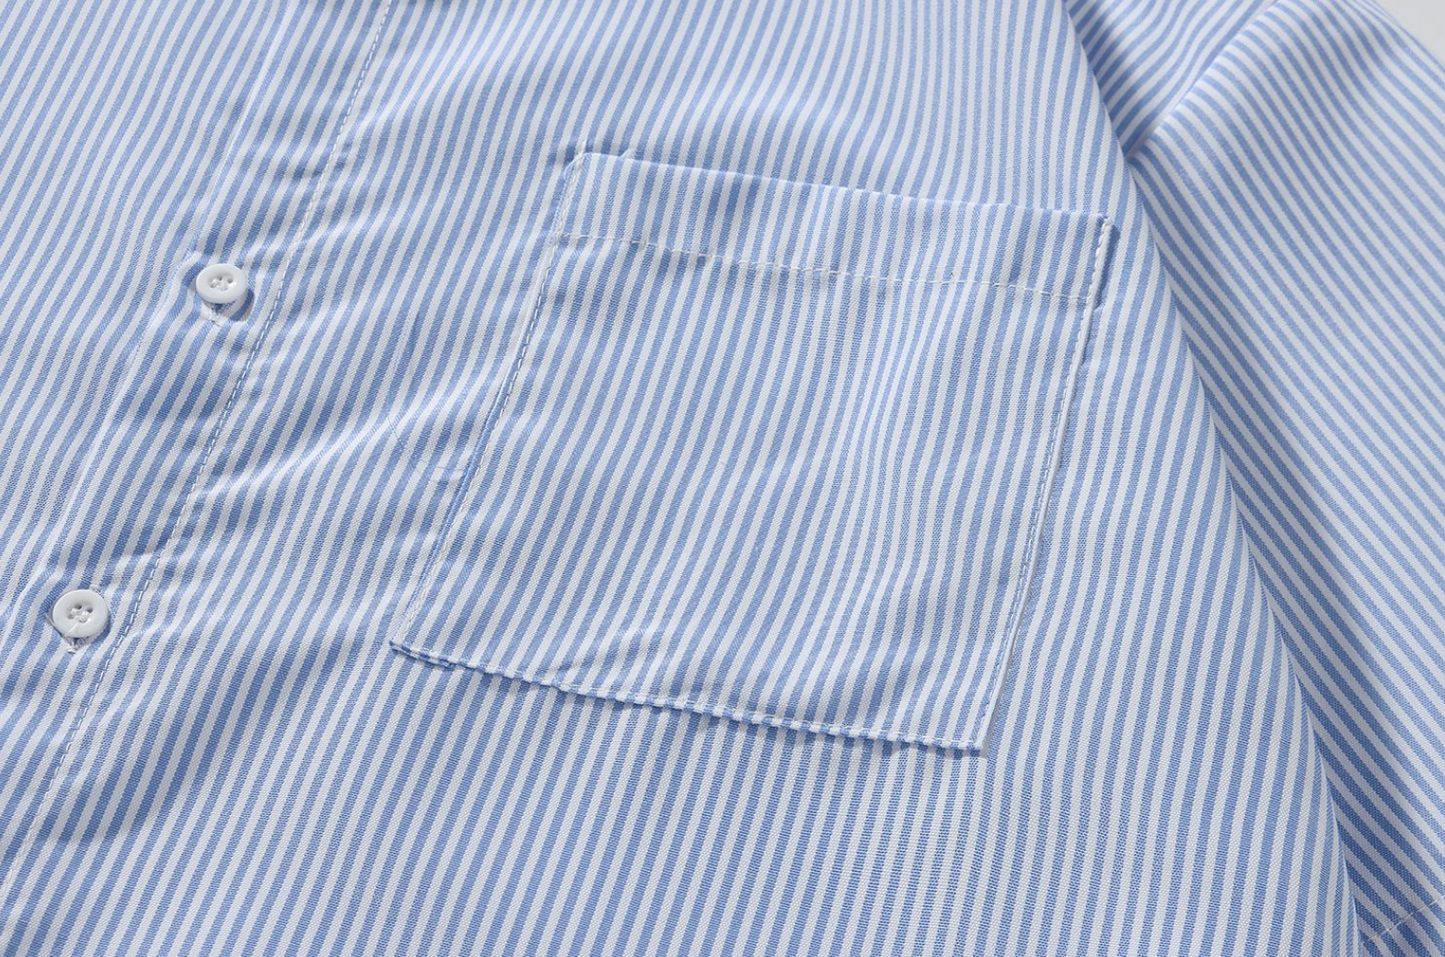 Striped Oversized Shirt (Size L)